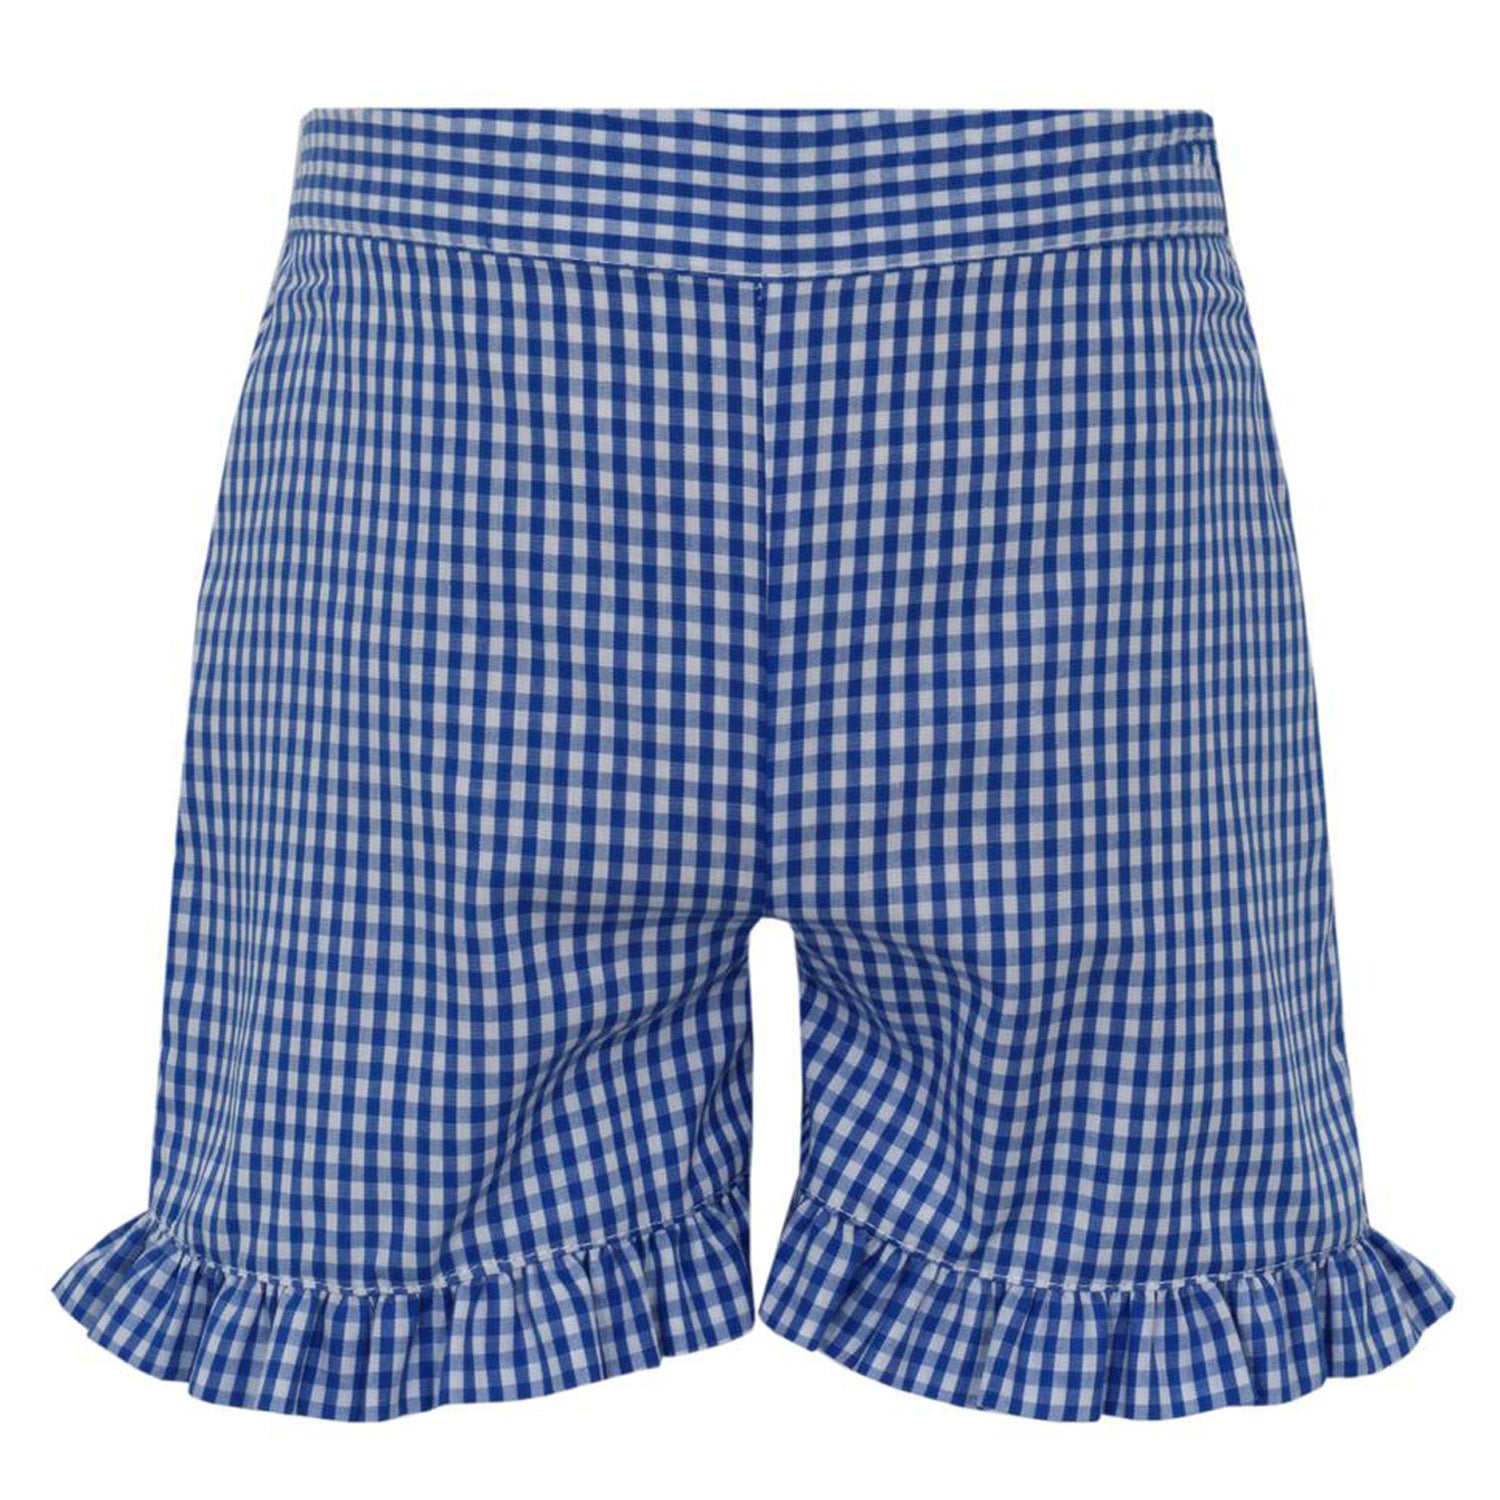 Royal Blue Gingham Girl's Shorts